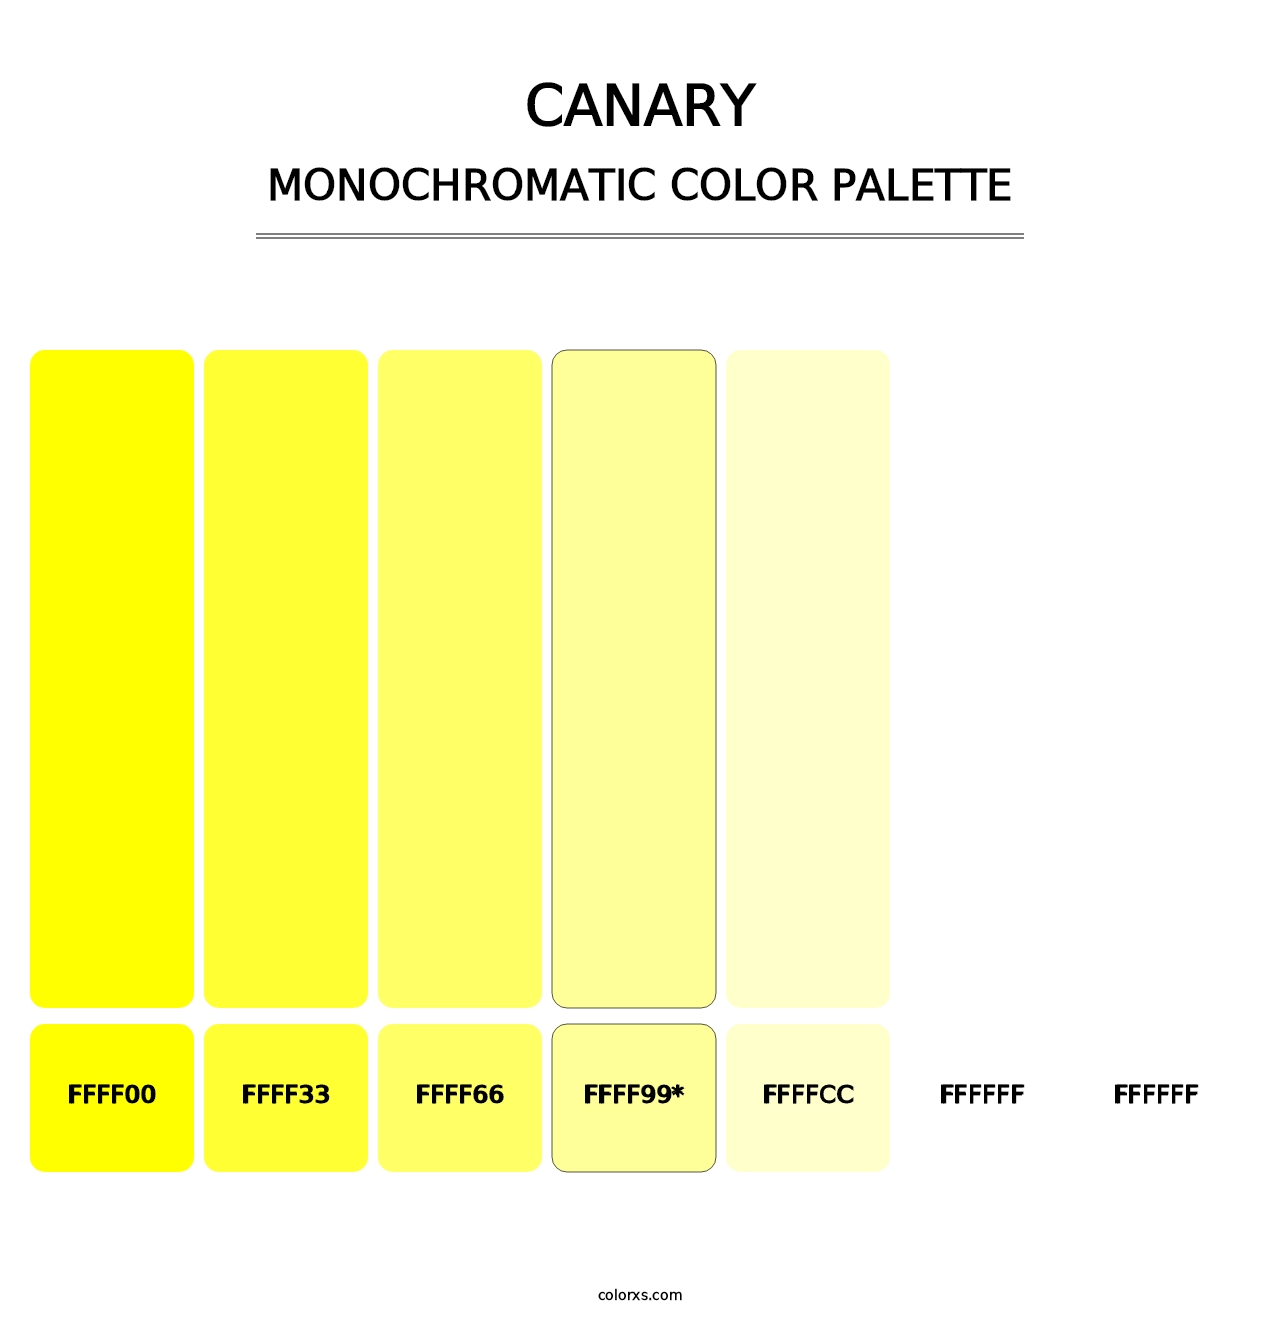 Canary - Monochromatic Color Palette